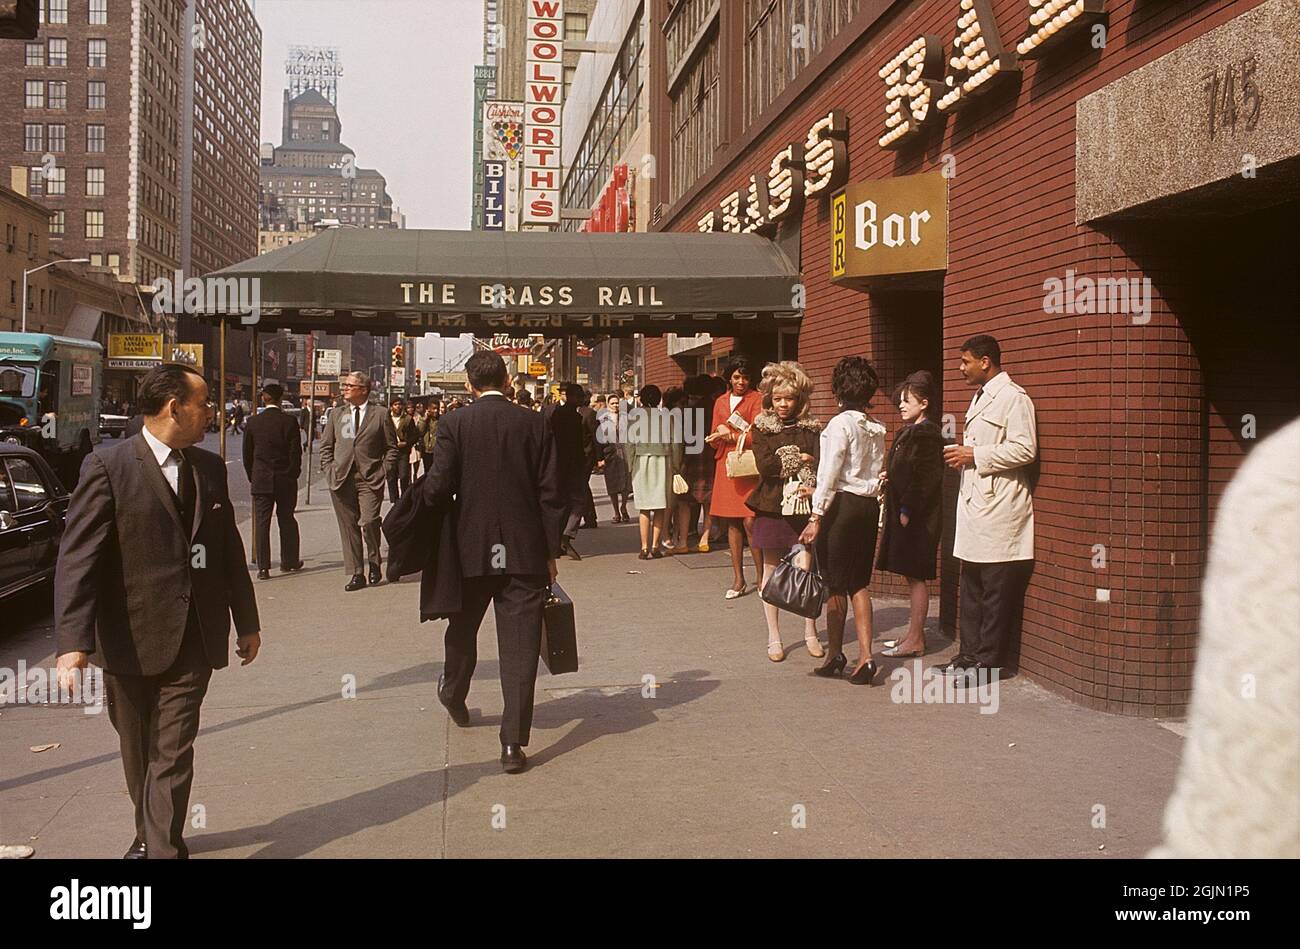 https://c8.alamy.com/comp/2GJN1P5/usa-new-york-1967-street-view-with-people-in-front-of-the-restaurant-the-brass-rail-kodachrome-slide-original-credit-roland-palm-ref-6-10-17-2GJN1P5.jpg